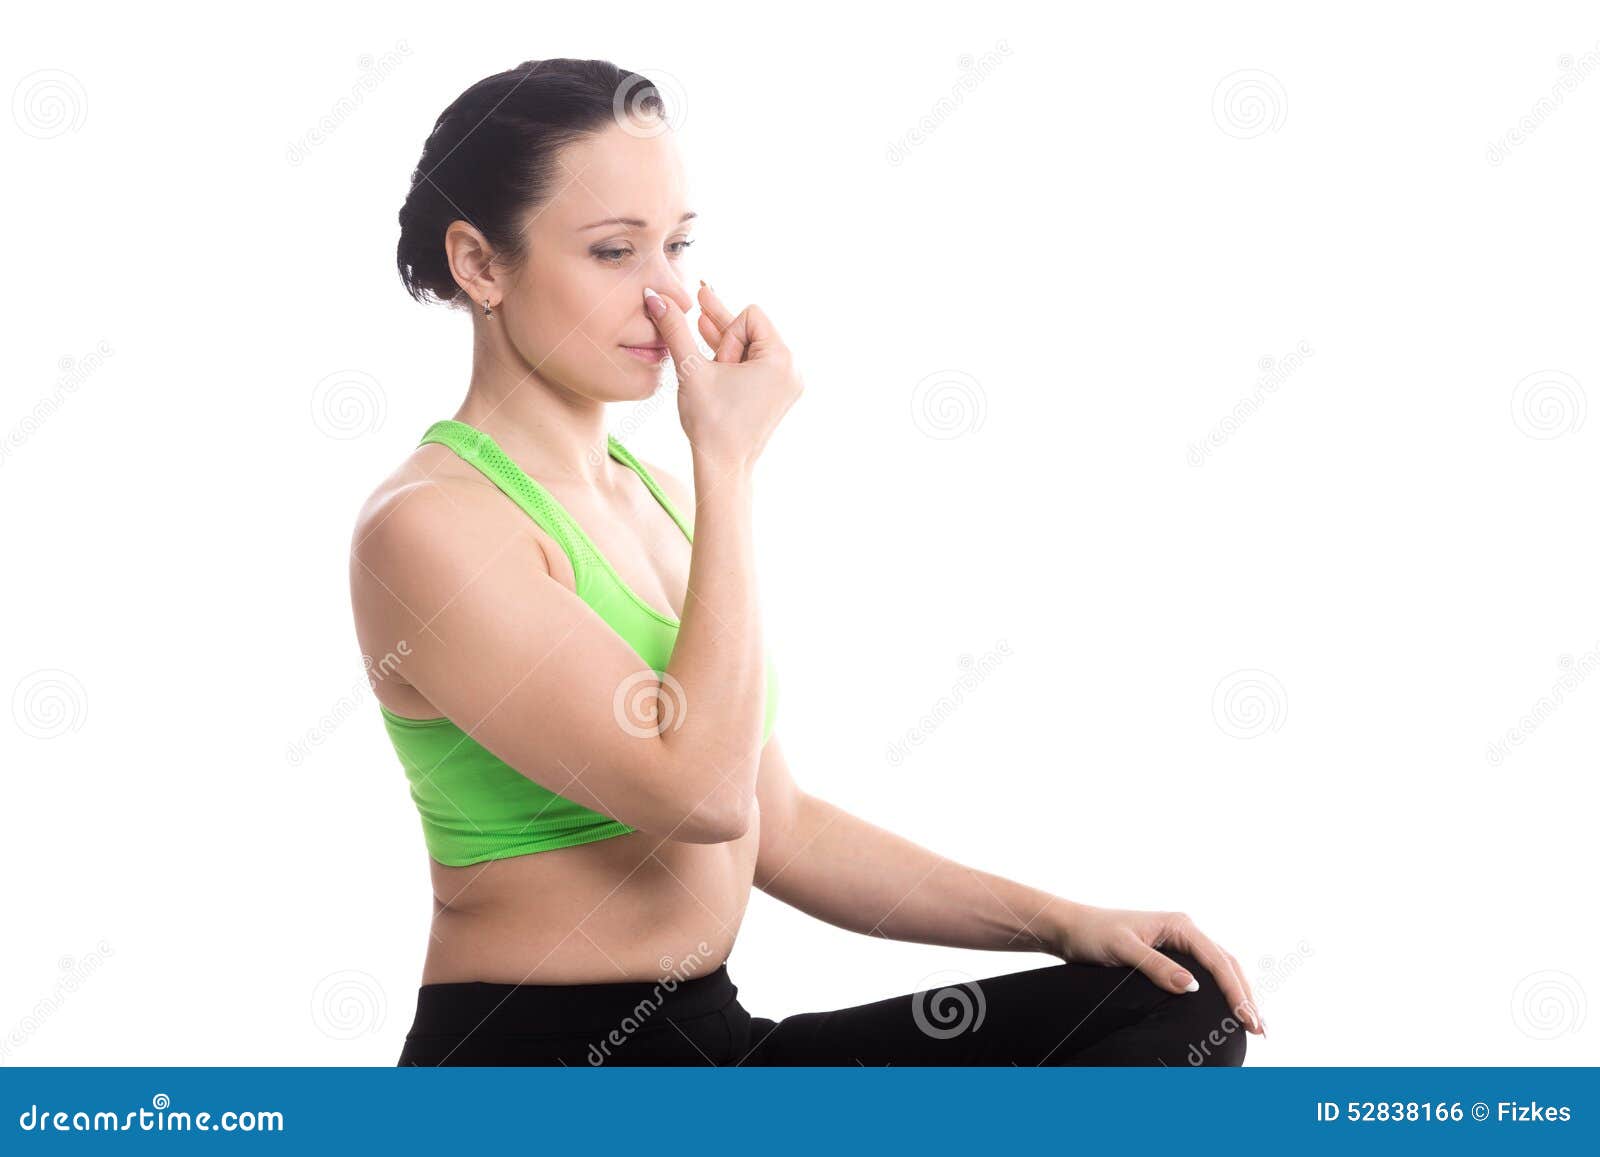 vishnu mudra in hatha yoga alternate nostril breathing